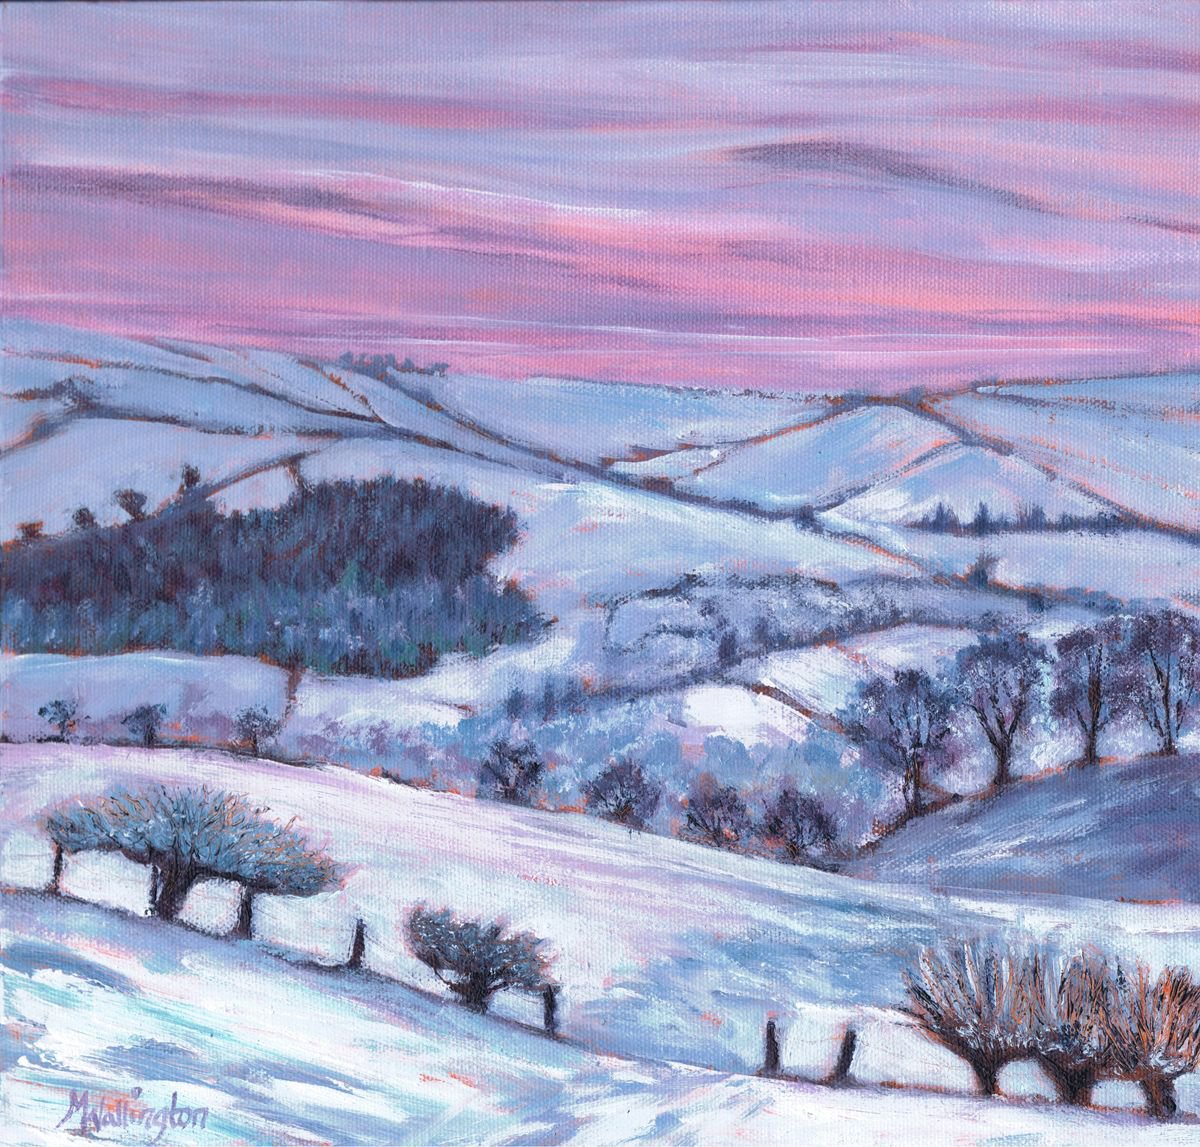 Welsh Hills in Snow by Michele Wallington